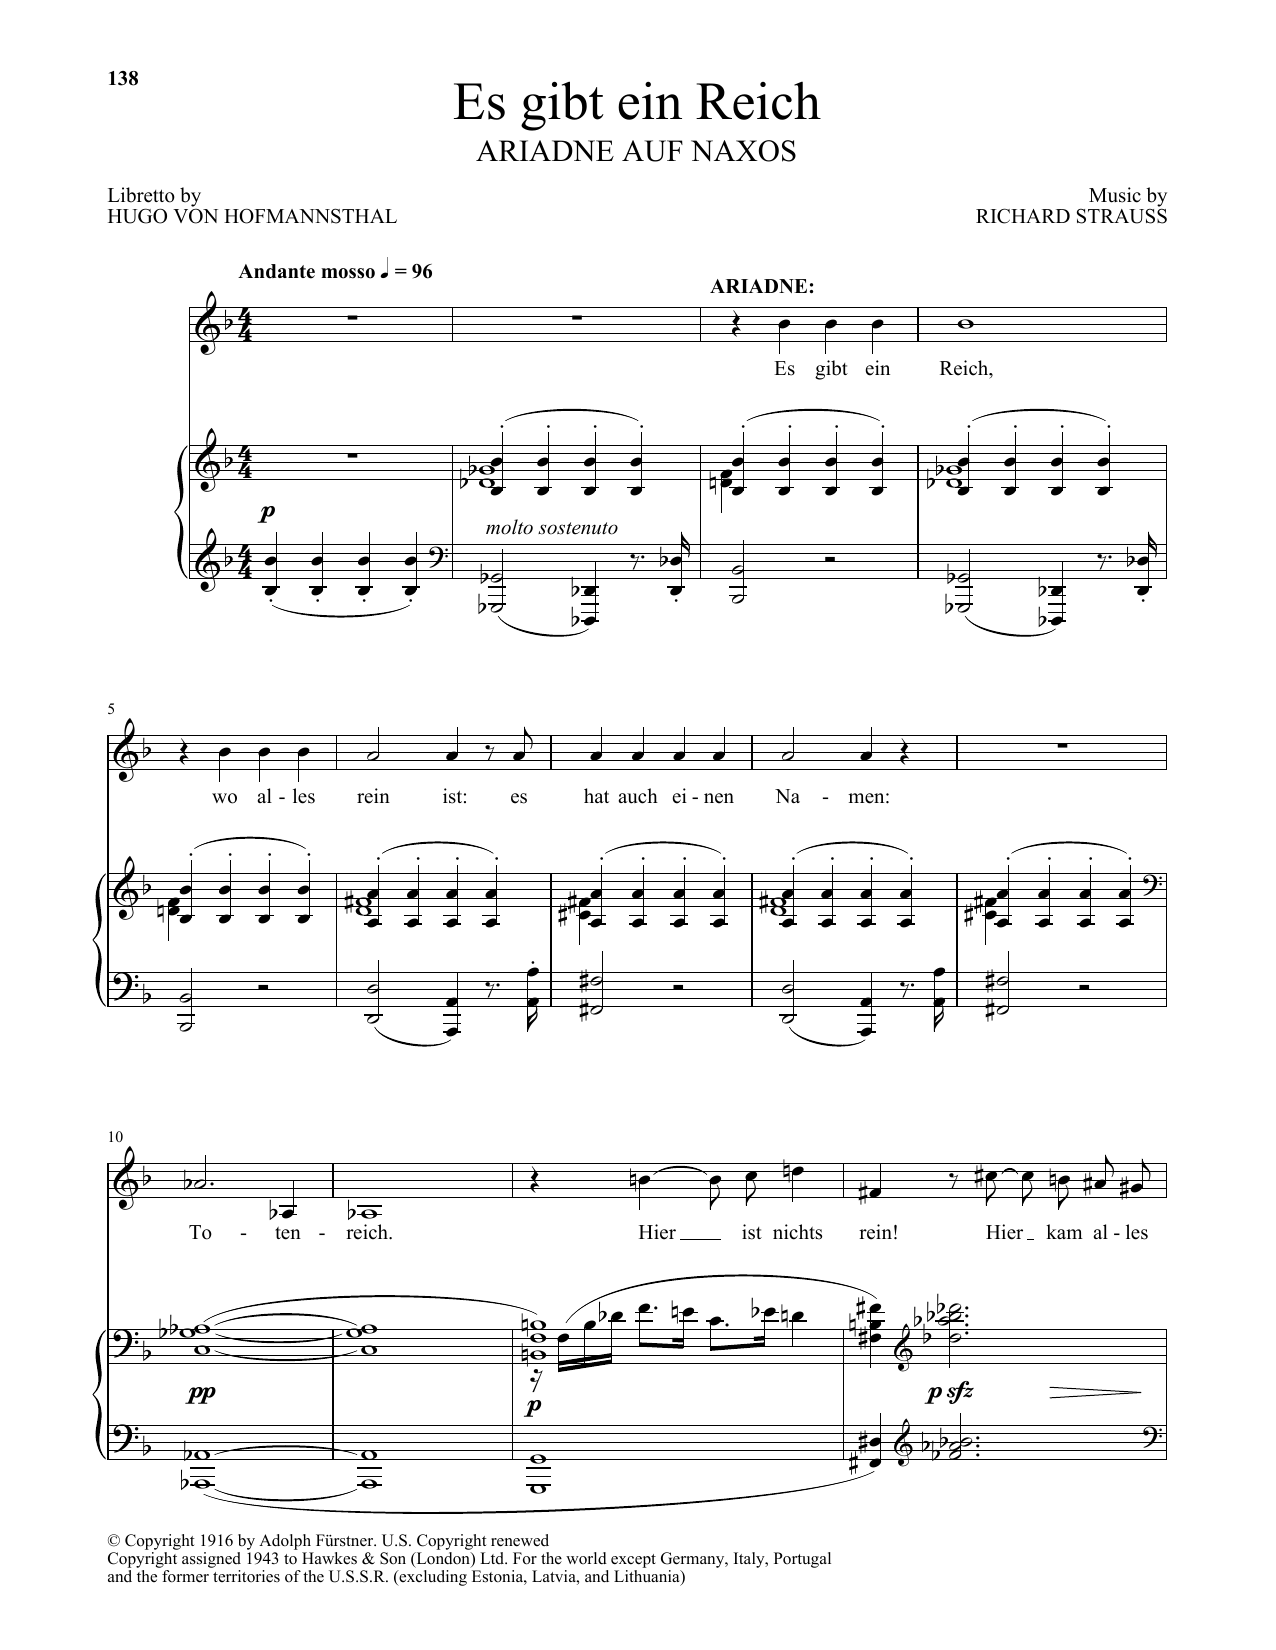 Richard Strauss Es Gibt Ein Reich (from Ariadne auf Naxos) Sheet Music Notes & Chords for Piano & Vocal - Download or Print PDF